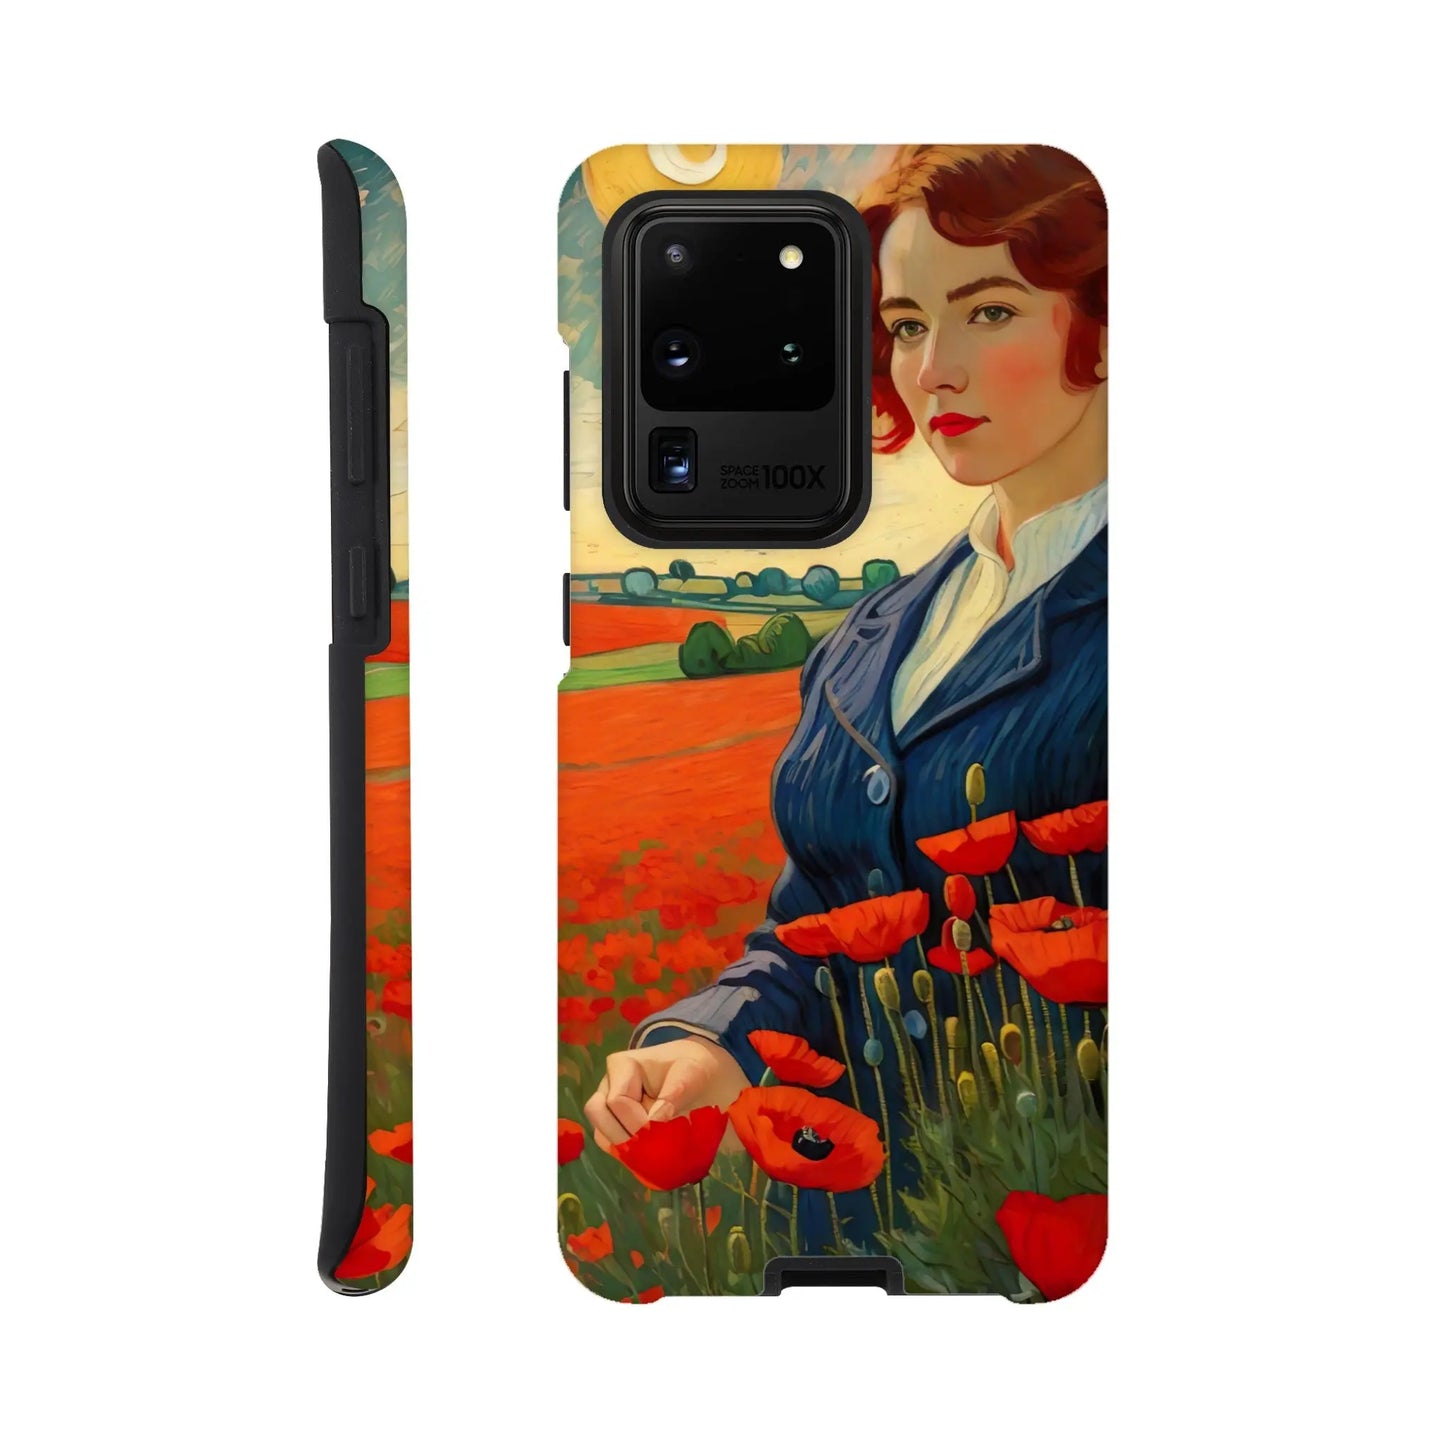 Smartphone-Hülle "Hart" - Blütezeit - Malerischer Stil, KI-Kunst RolConArt, Landschaften, Galaxy-S20-Ultra